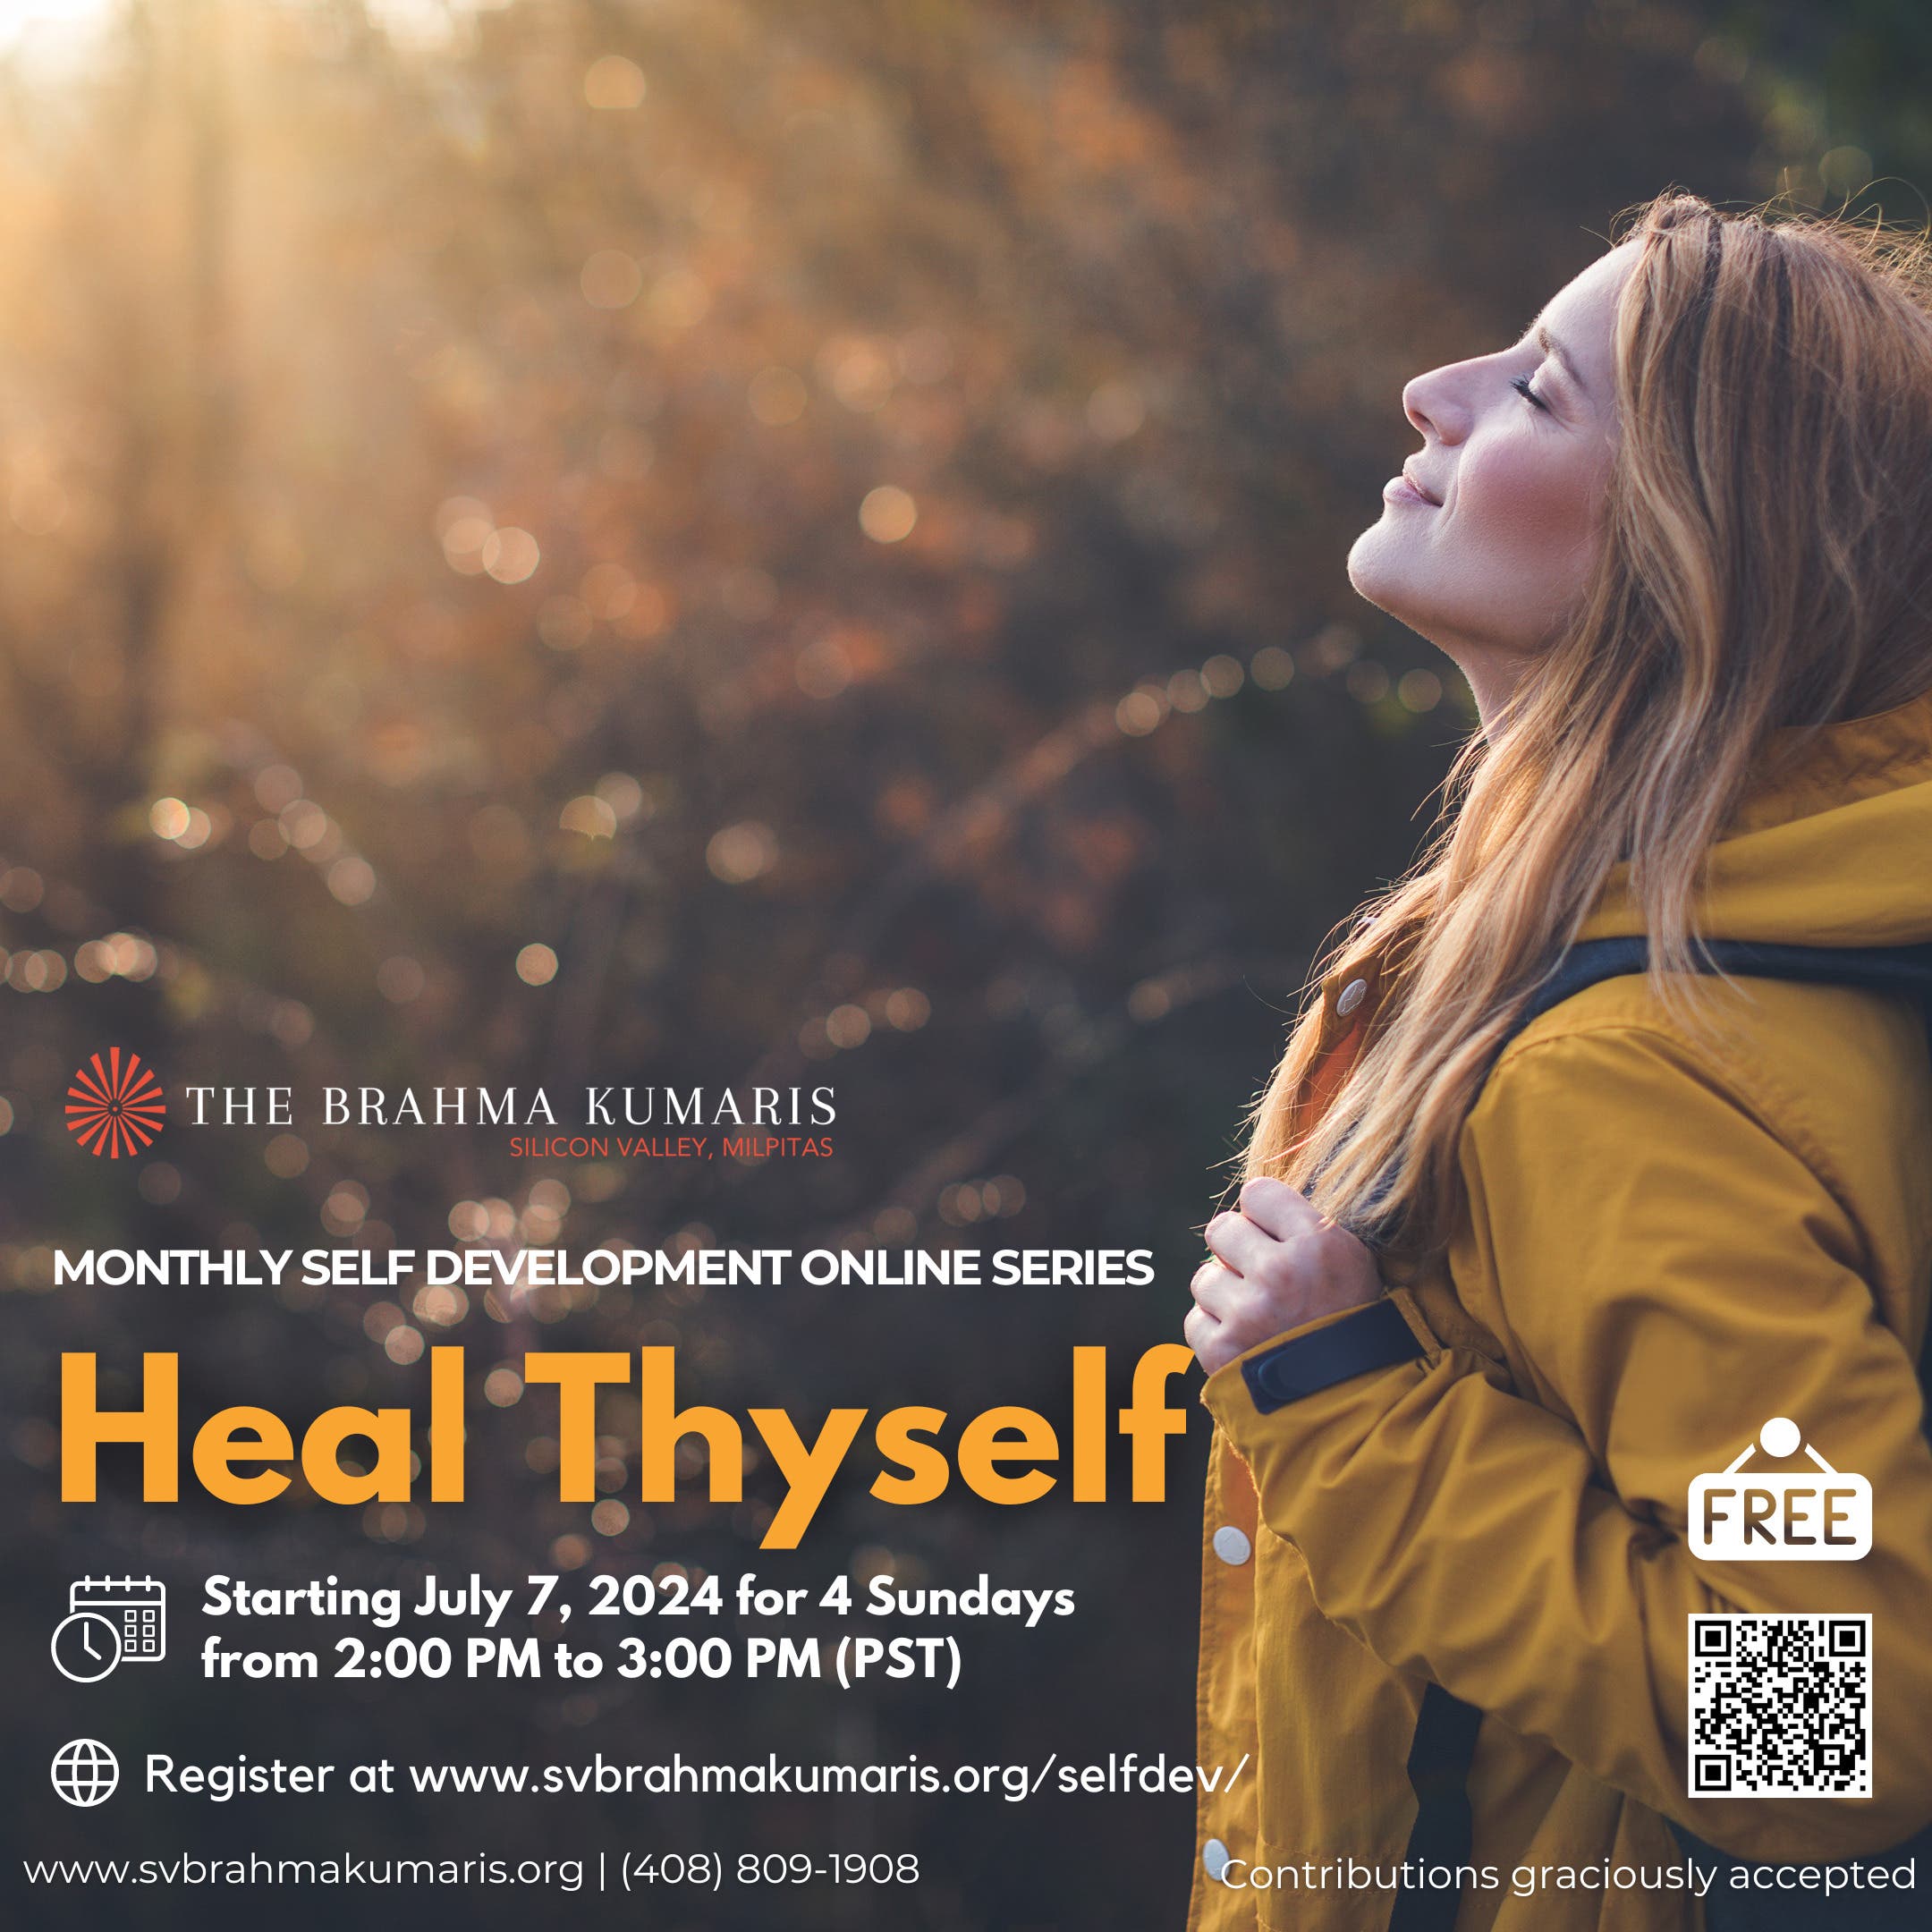  "Heal Thyself" Online Self Development Series 